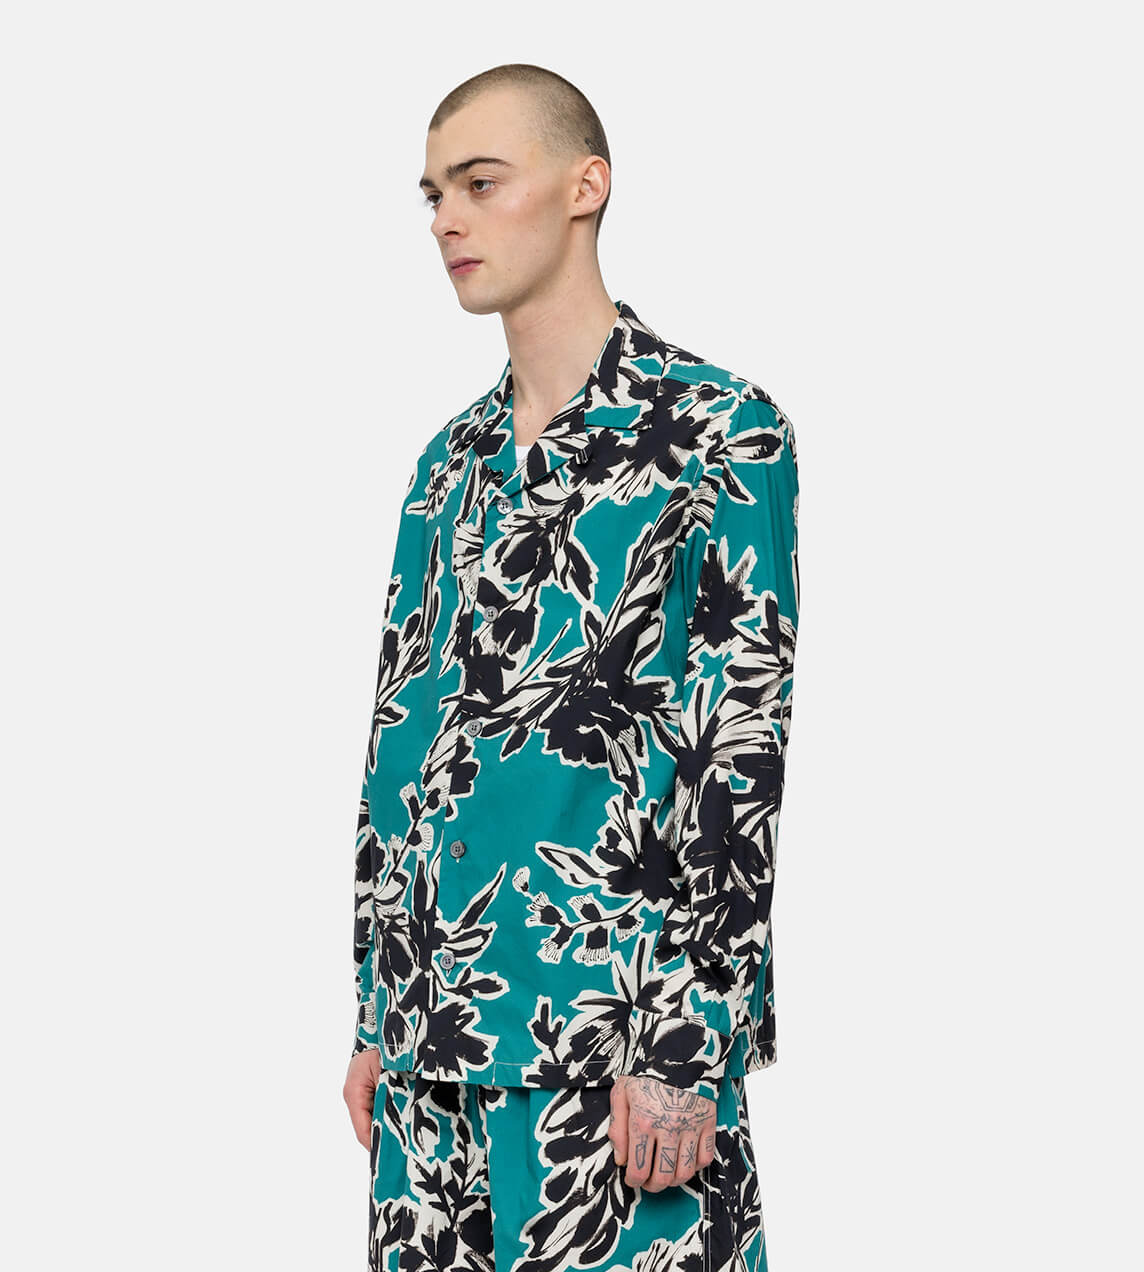 DAVI - Abstract Floral Print Long Sleeve Shirt